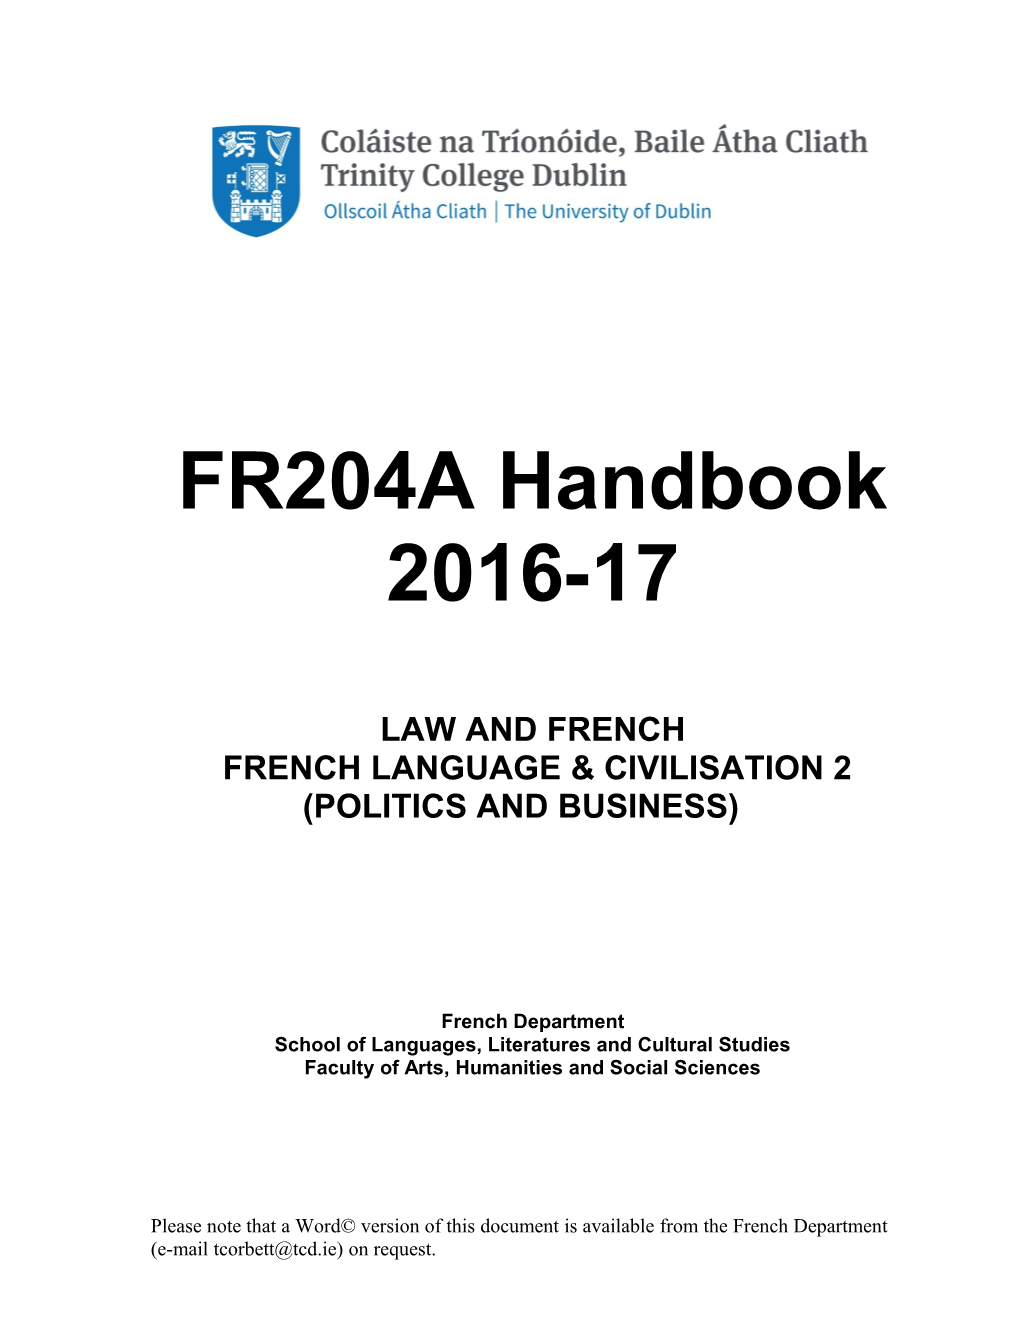 French Language & Civilisation 2 (Politics and Business)